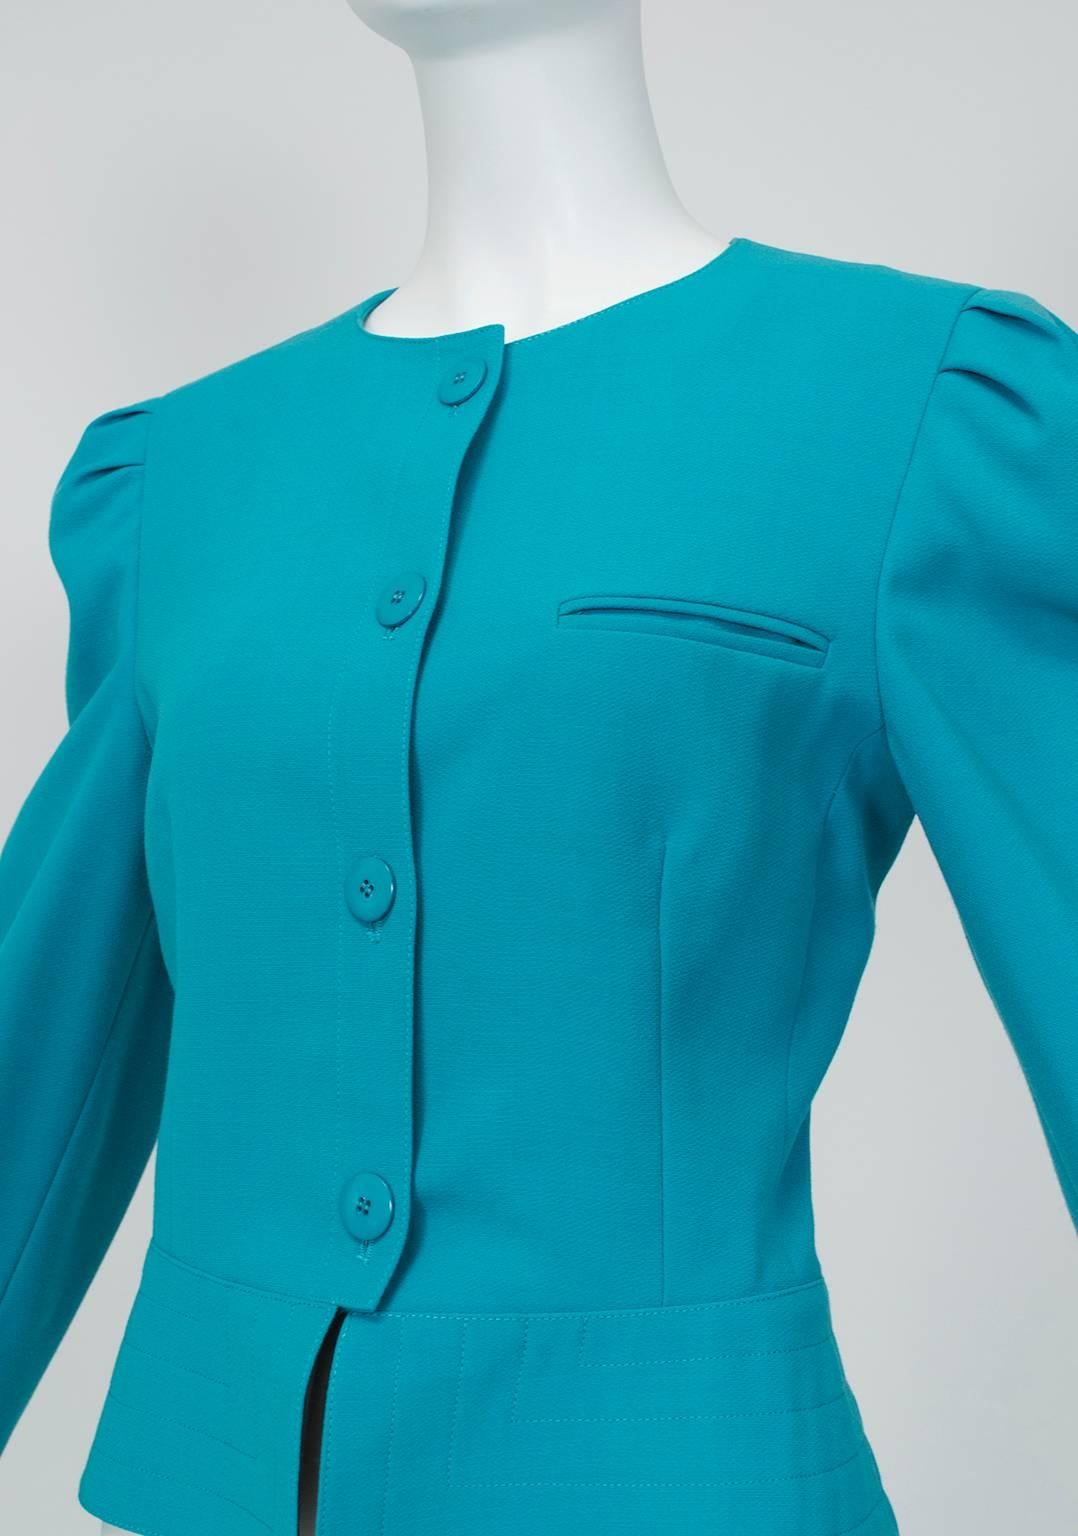 Blue Louis Féraud Turquoise Knife Pleat Power Skirt Suit w Provenance - US 8, 1980s For Sale